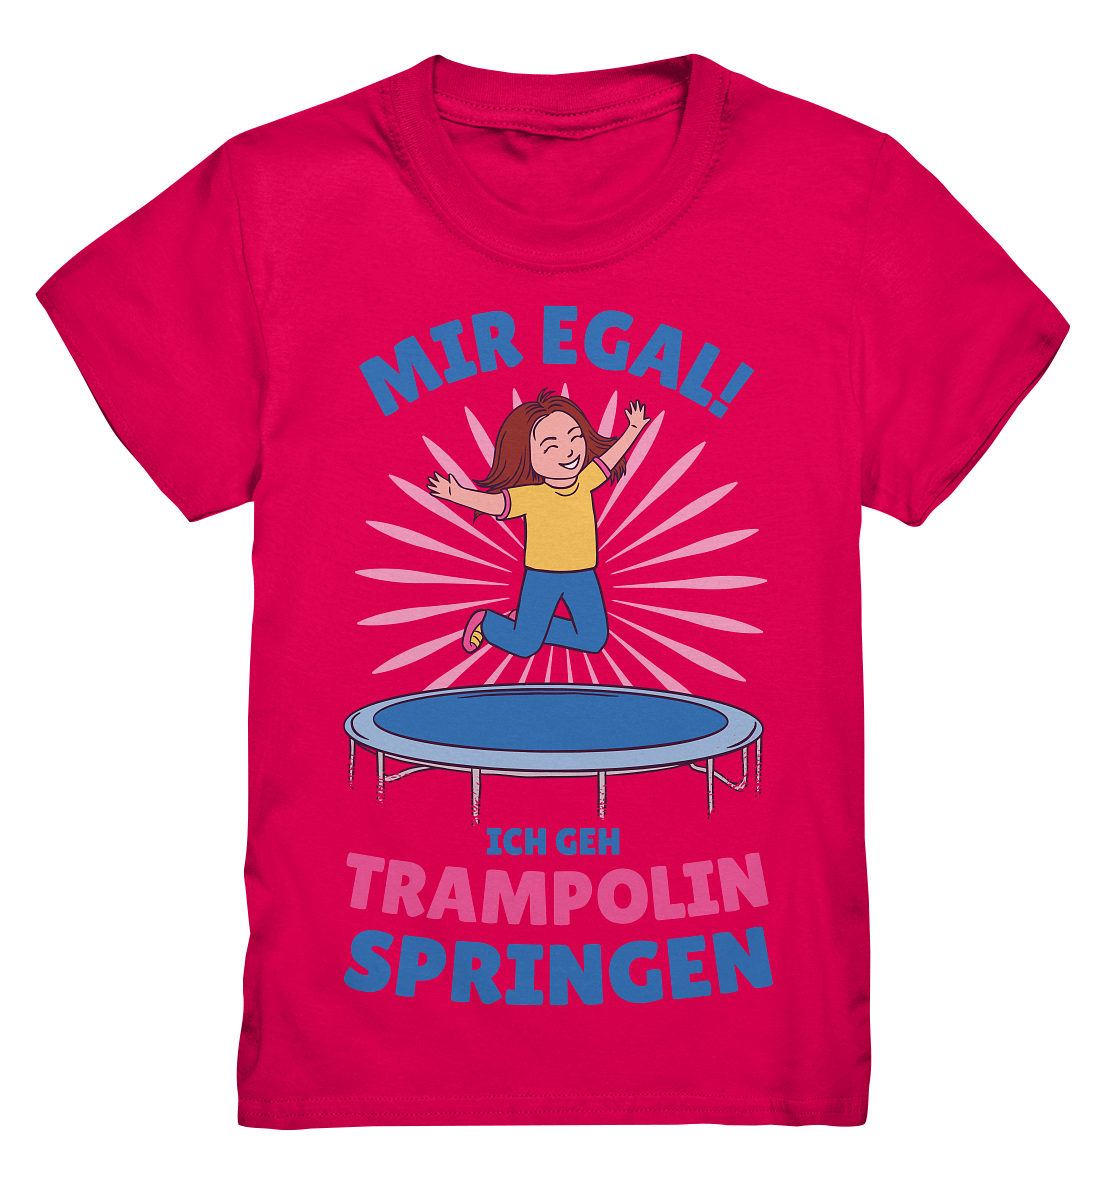 Mir egal ich geh Trampolin springen  - Kids Premium Shirt